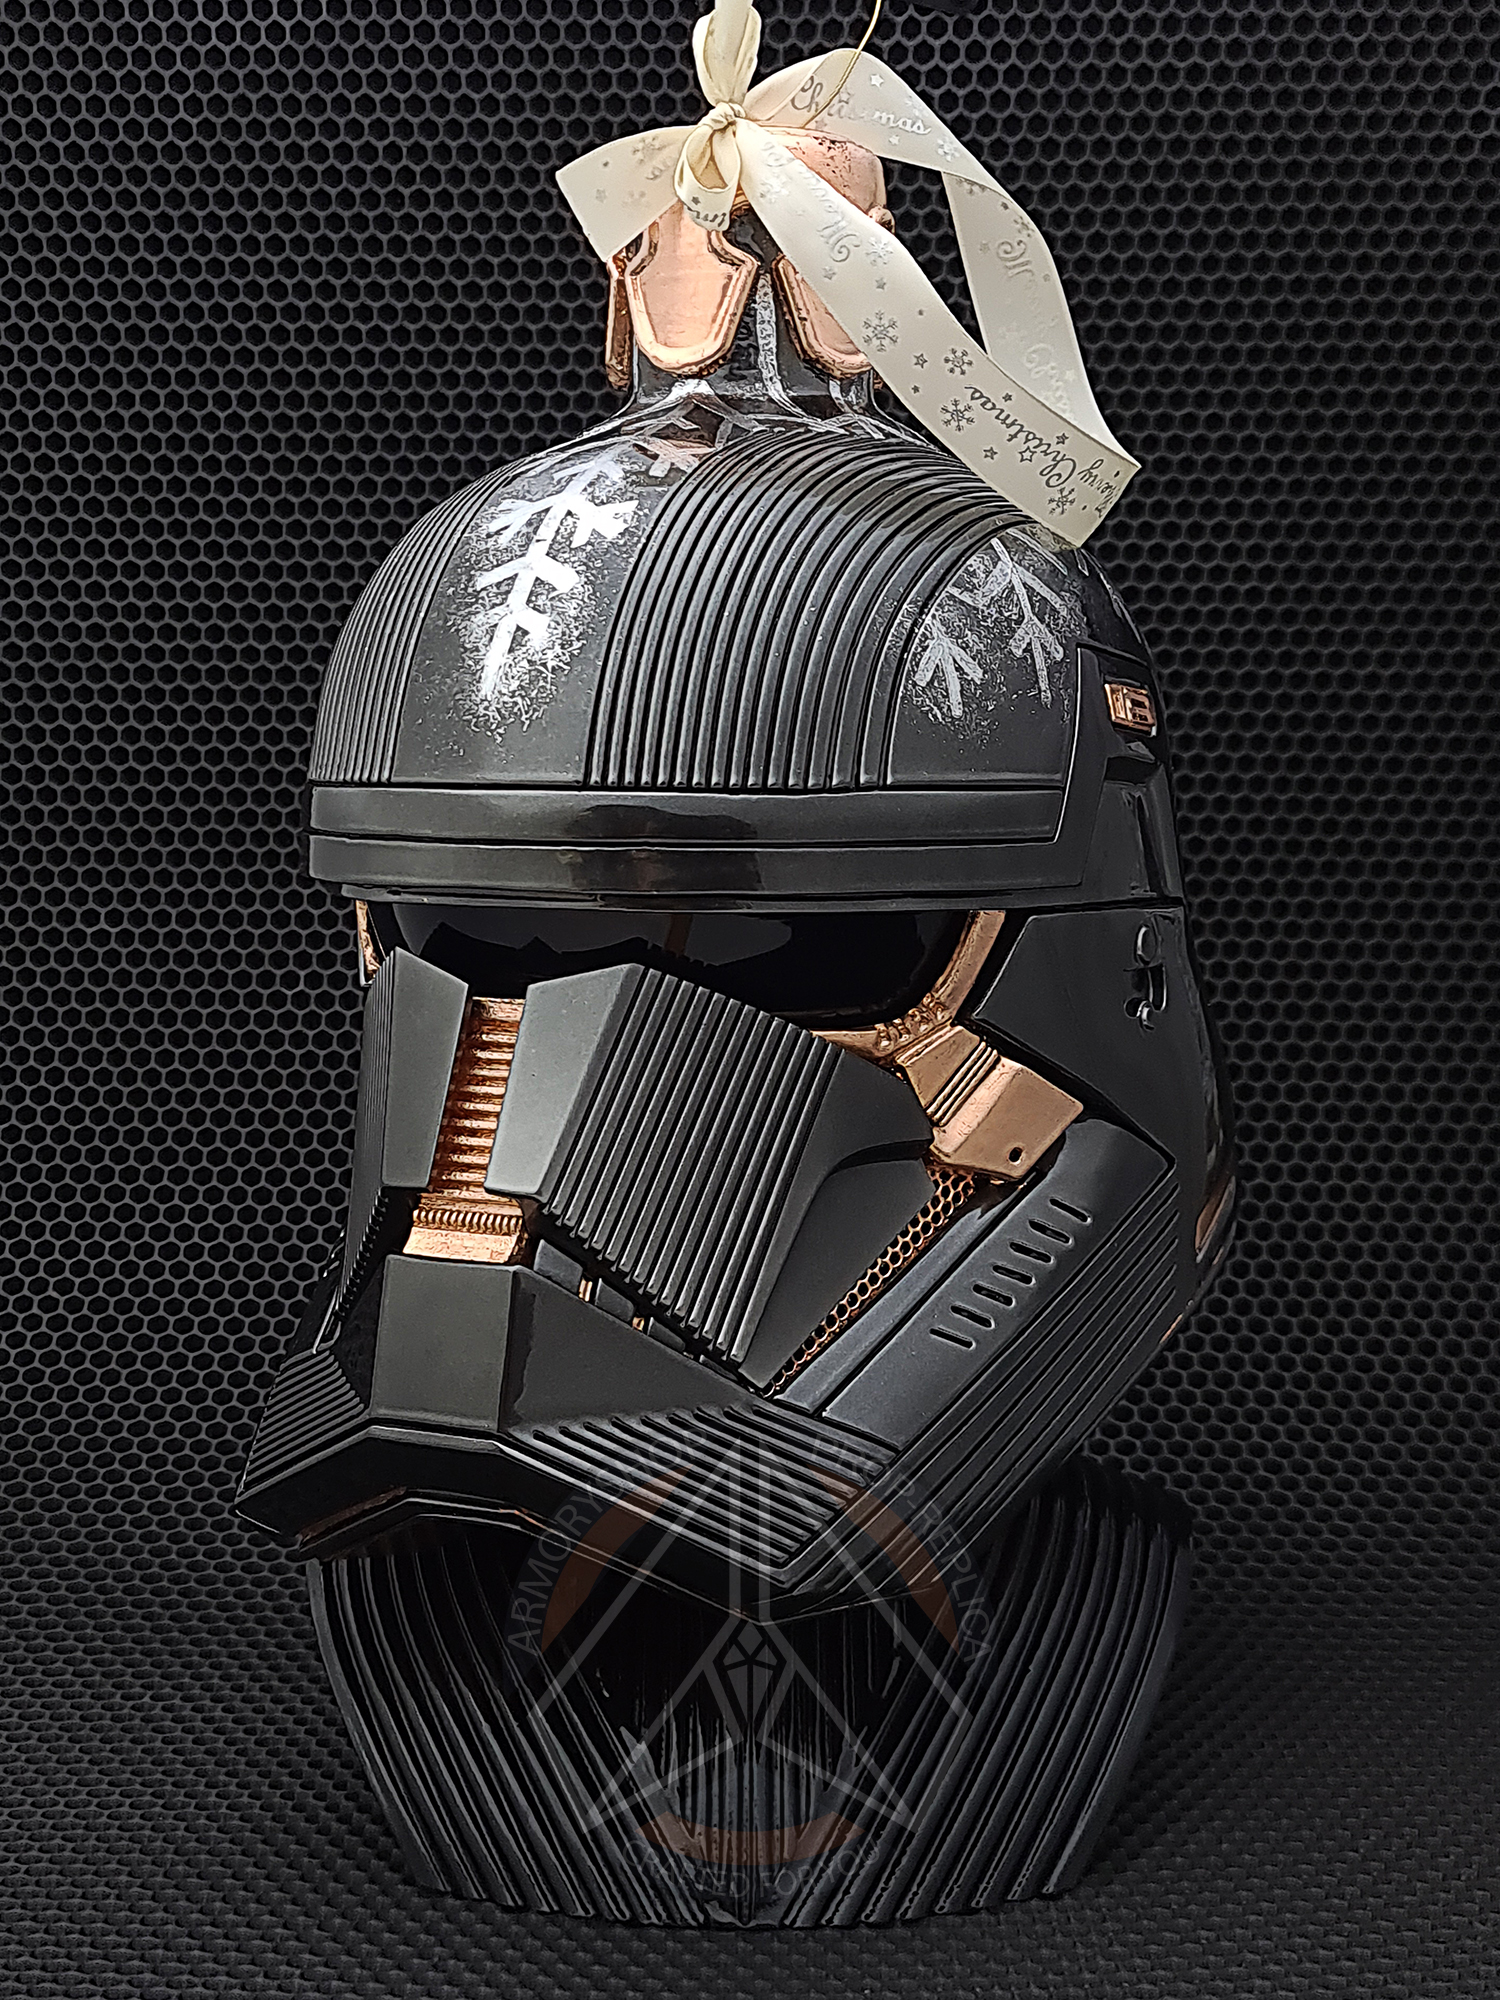 Christmas Sith - Sith Trooper Mk3 Helmet (Art Project)